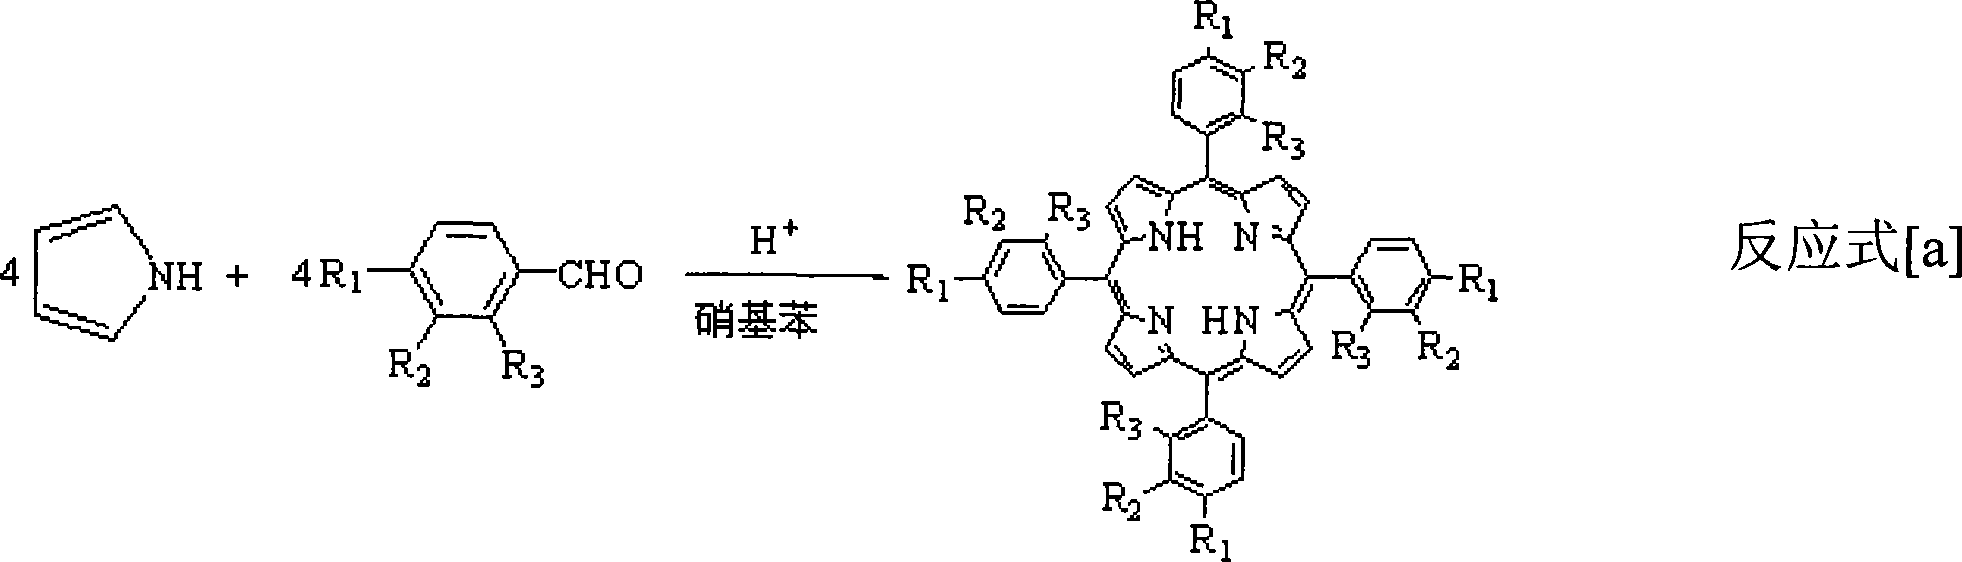 Method for synthesizing mu-oxo binuclear ferriporphyrin